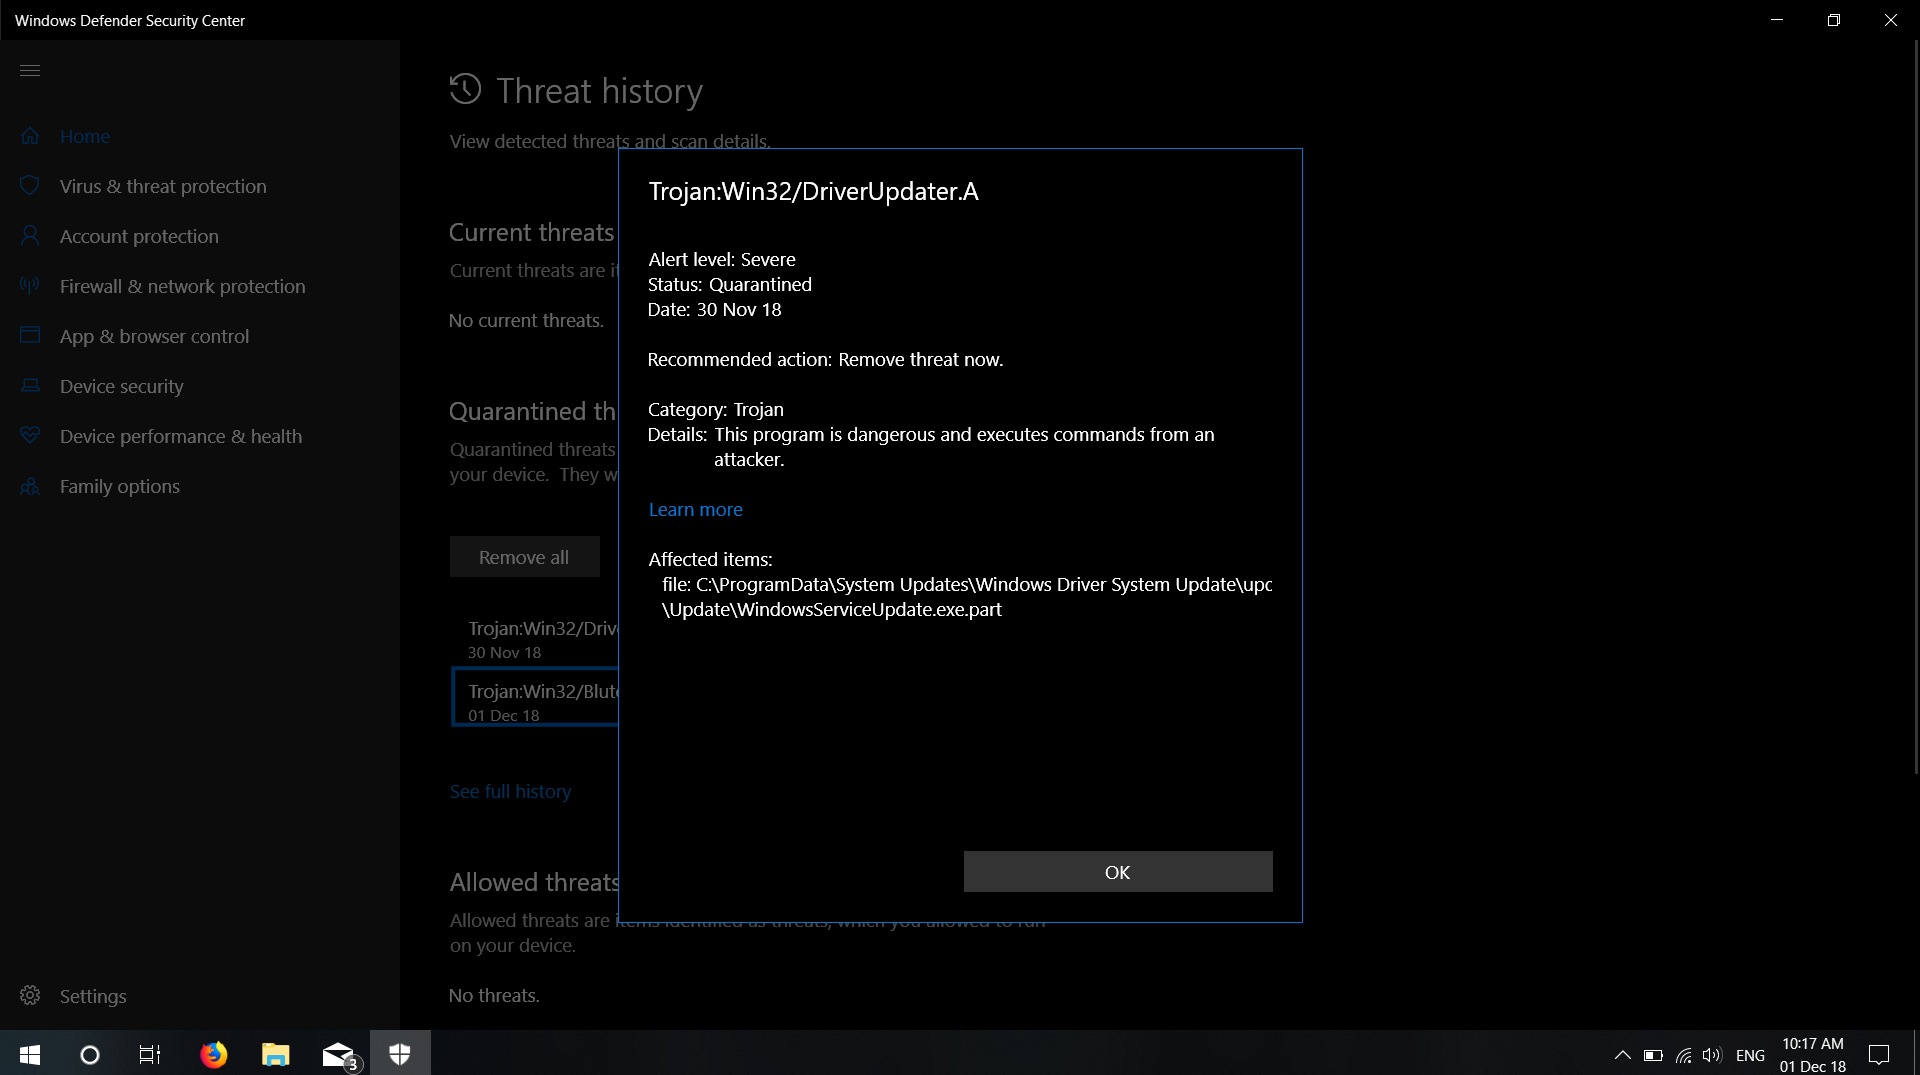 Windows Defender showing Trojans in Windows Driver System Update folder b0d3efc8-a2a2-4720-8342-c15d169cffd1?upload=true.png